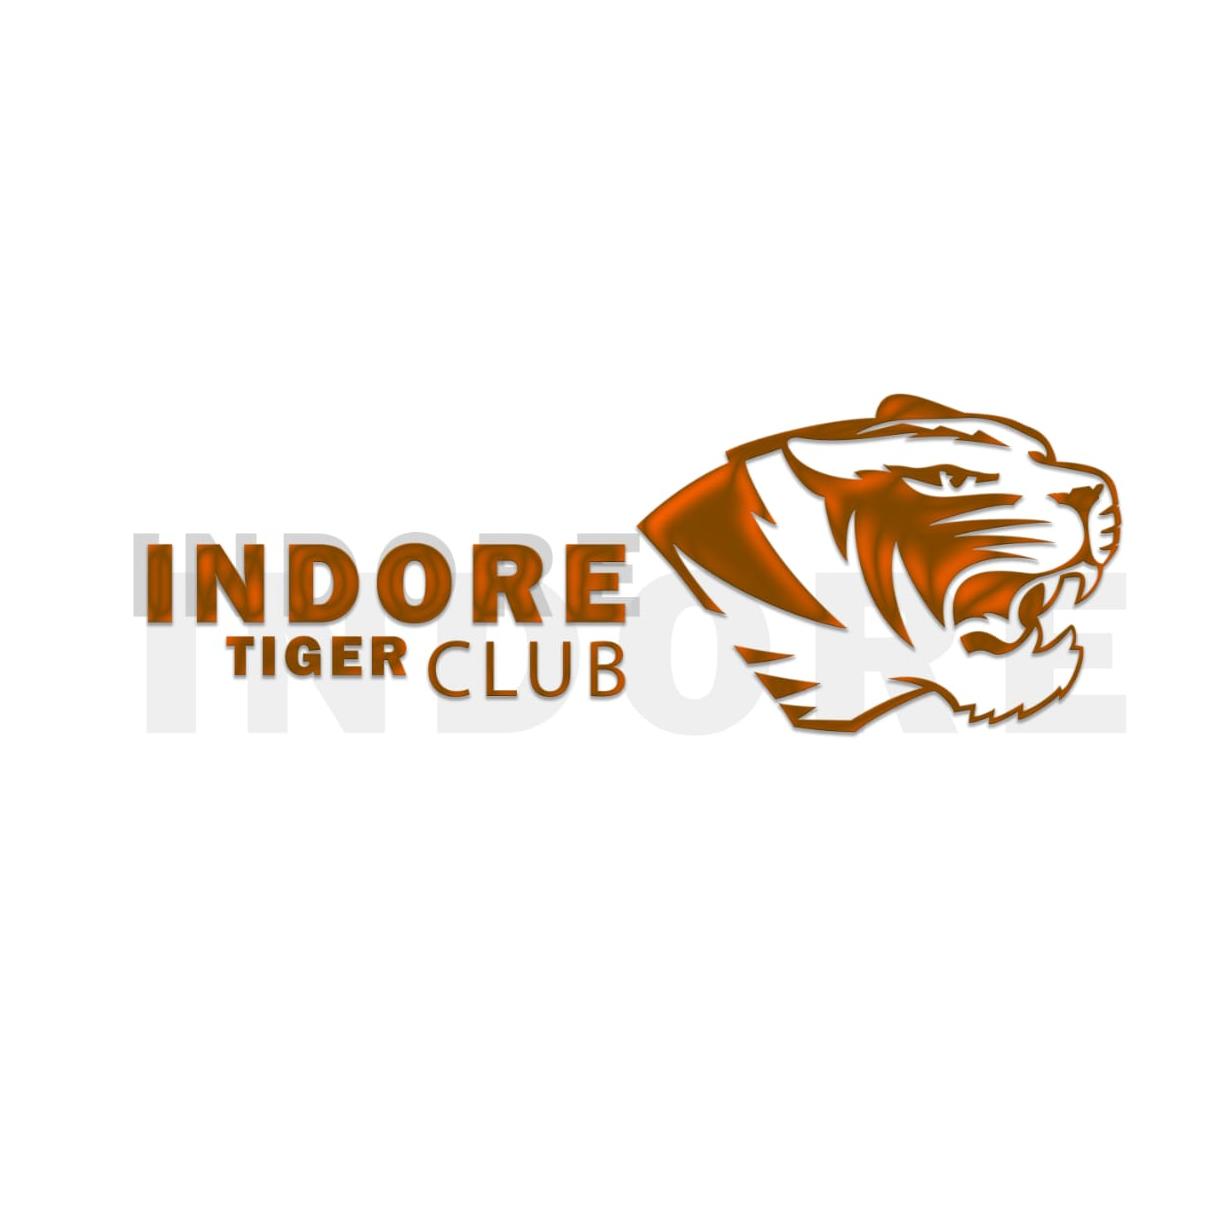 Indore tiger club | Kabaddi Club in Indore, India | Indore tiger club  Profile